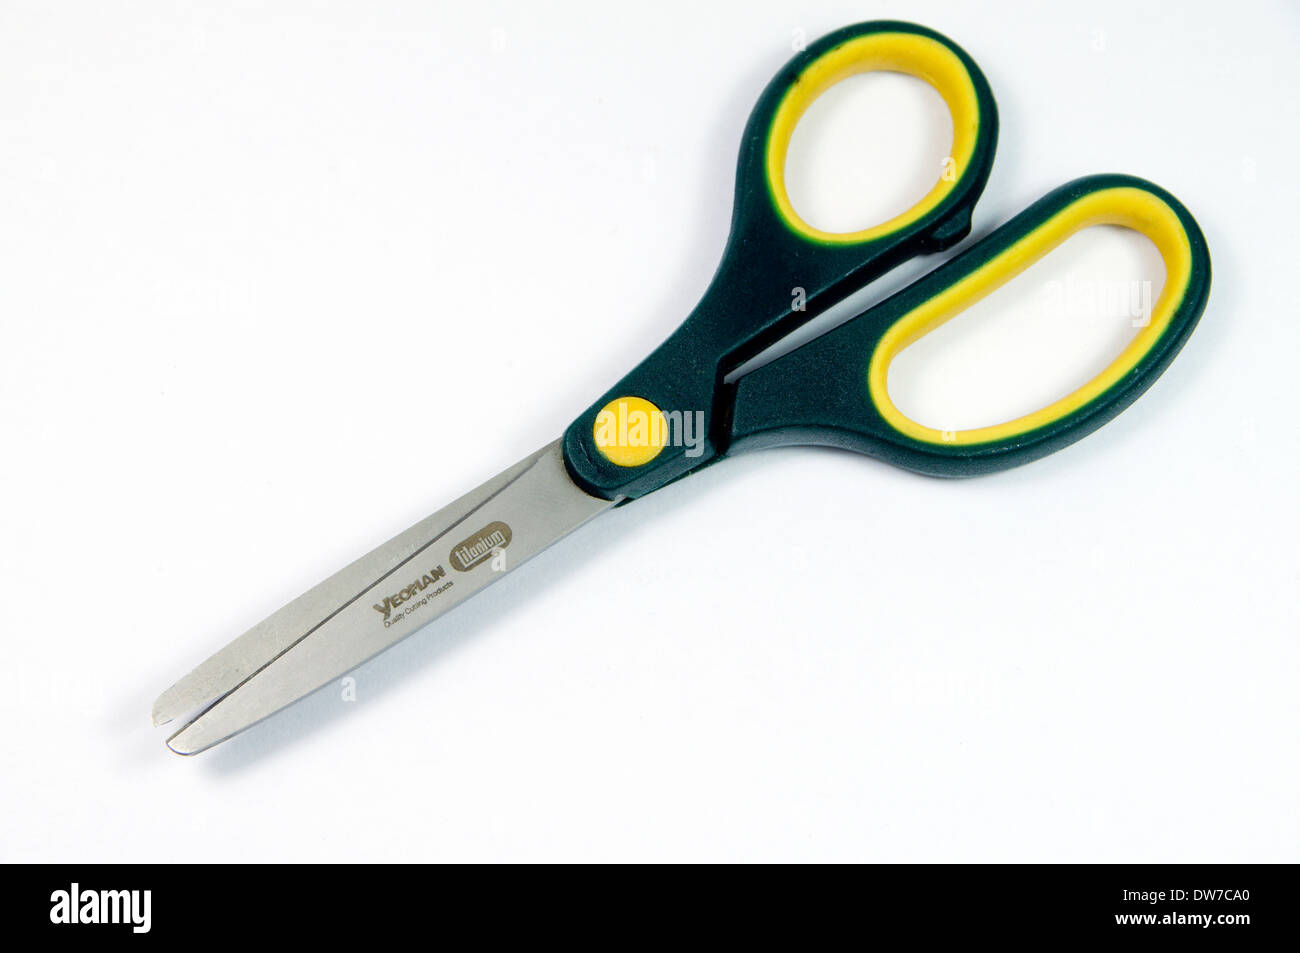 Pair of scissors. Stock Photo